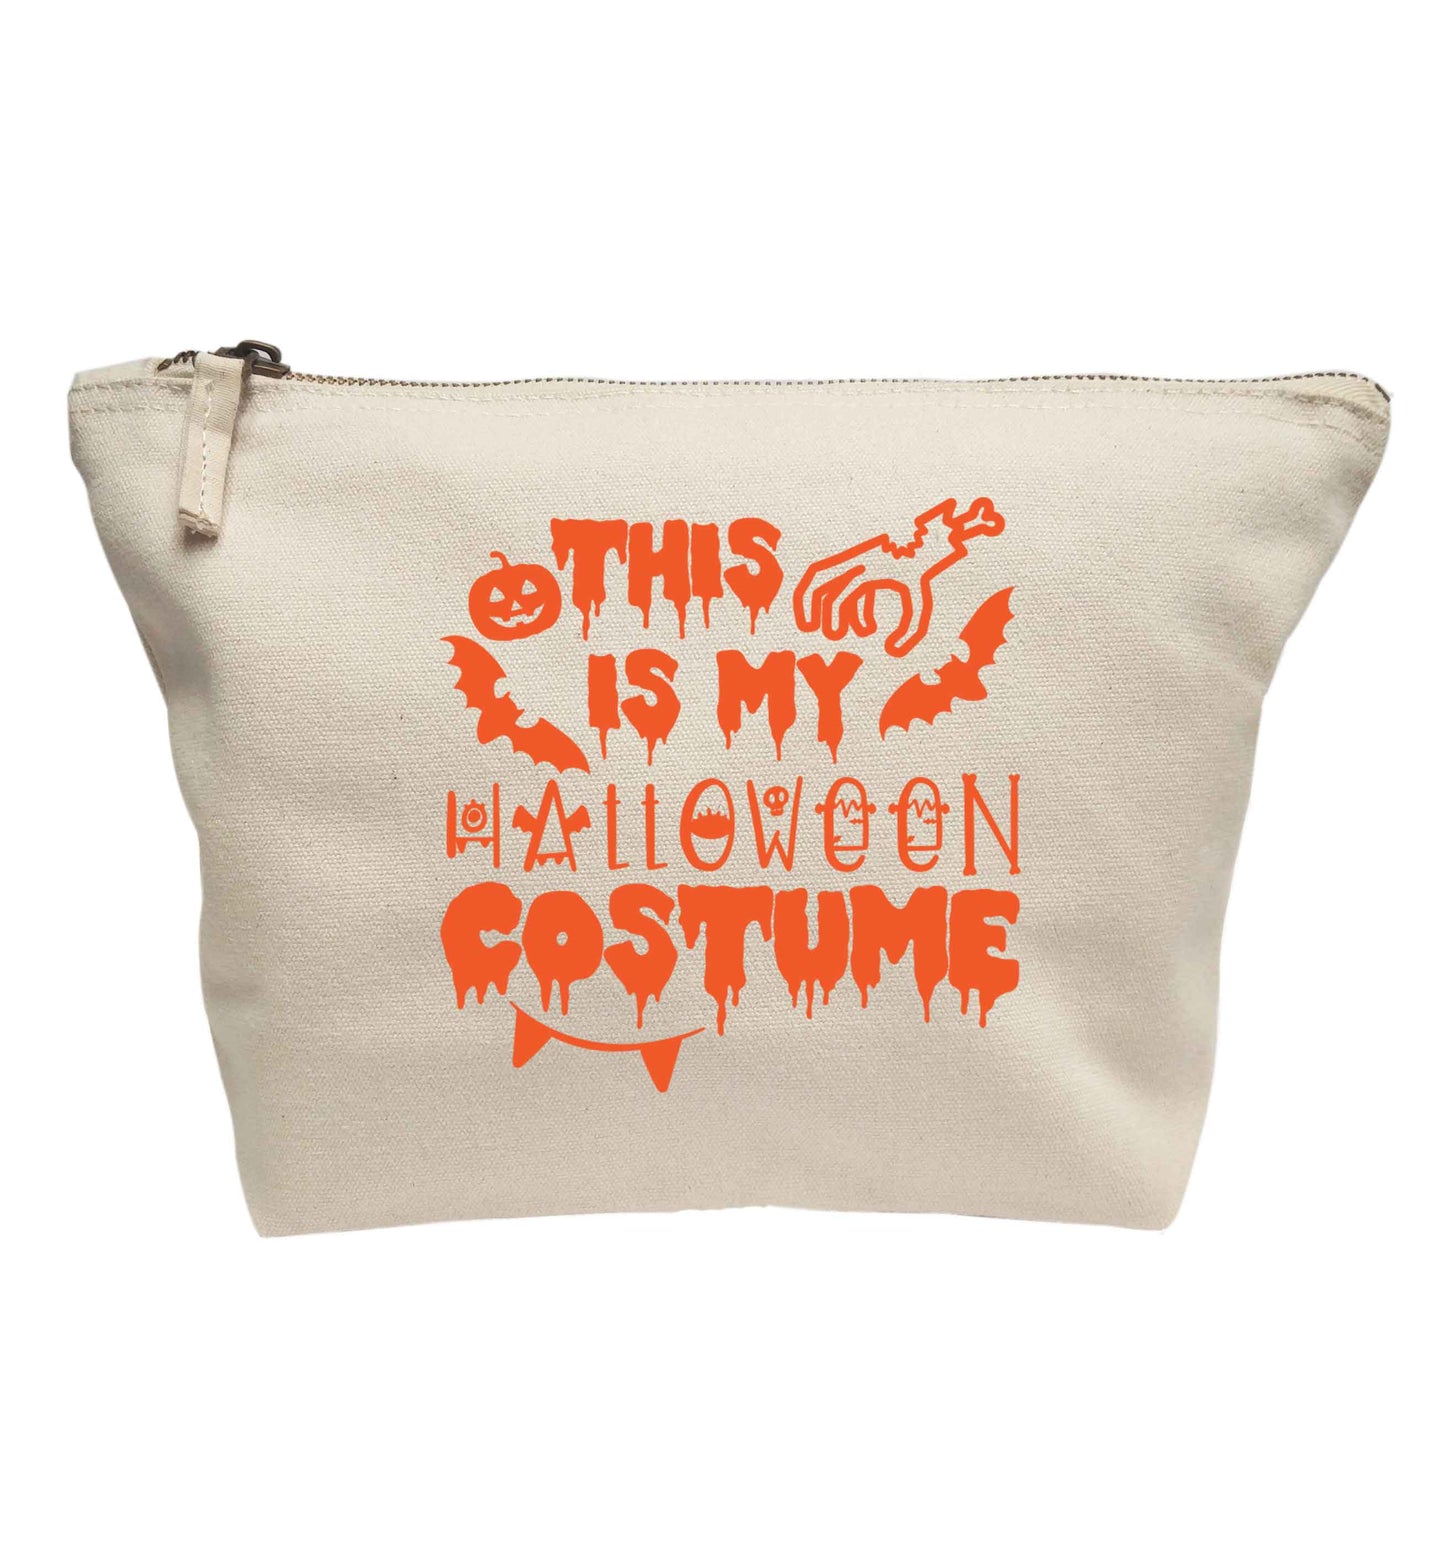 This is my halloween costume | Makeup / wash bag